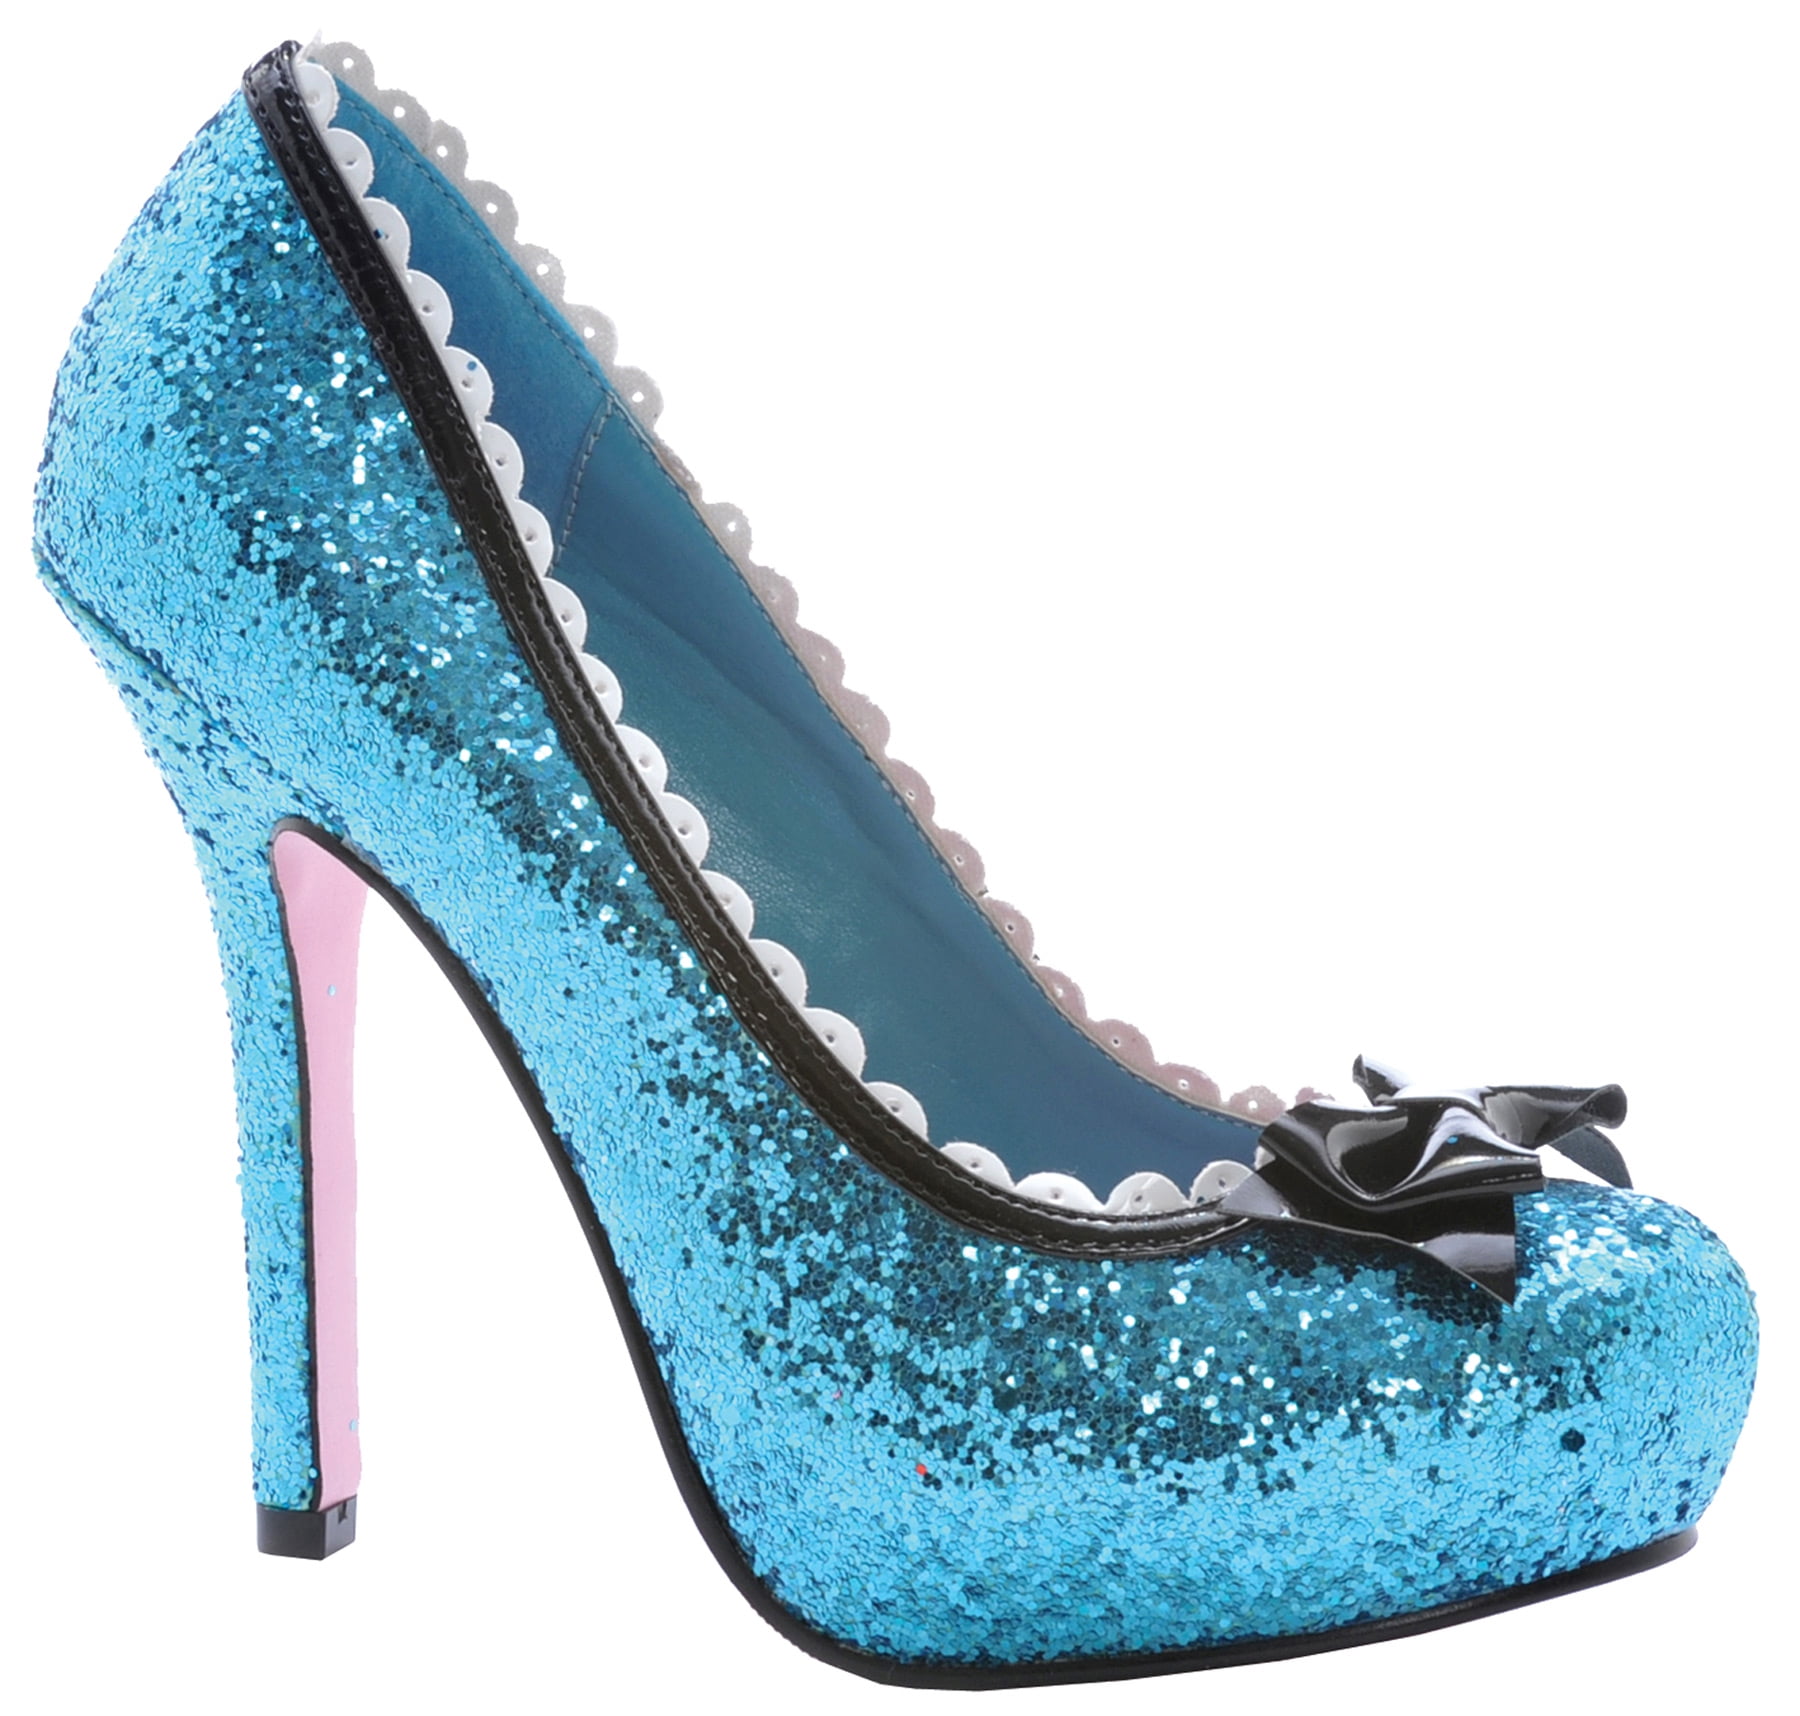 Zara Turquoise heels | Turquoise heels, Lace up sandal heels, Faux suede  heels